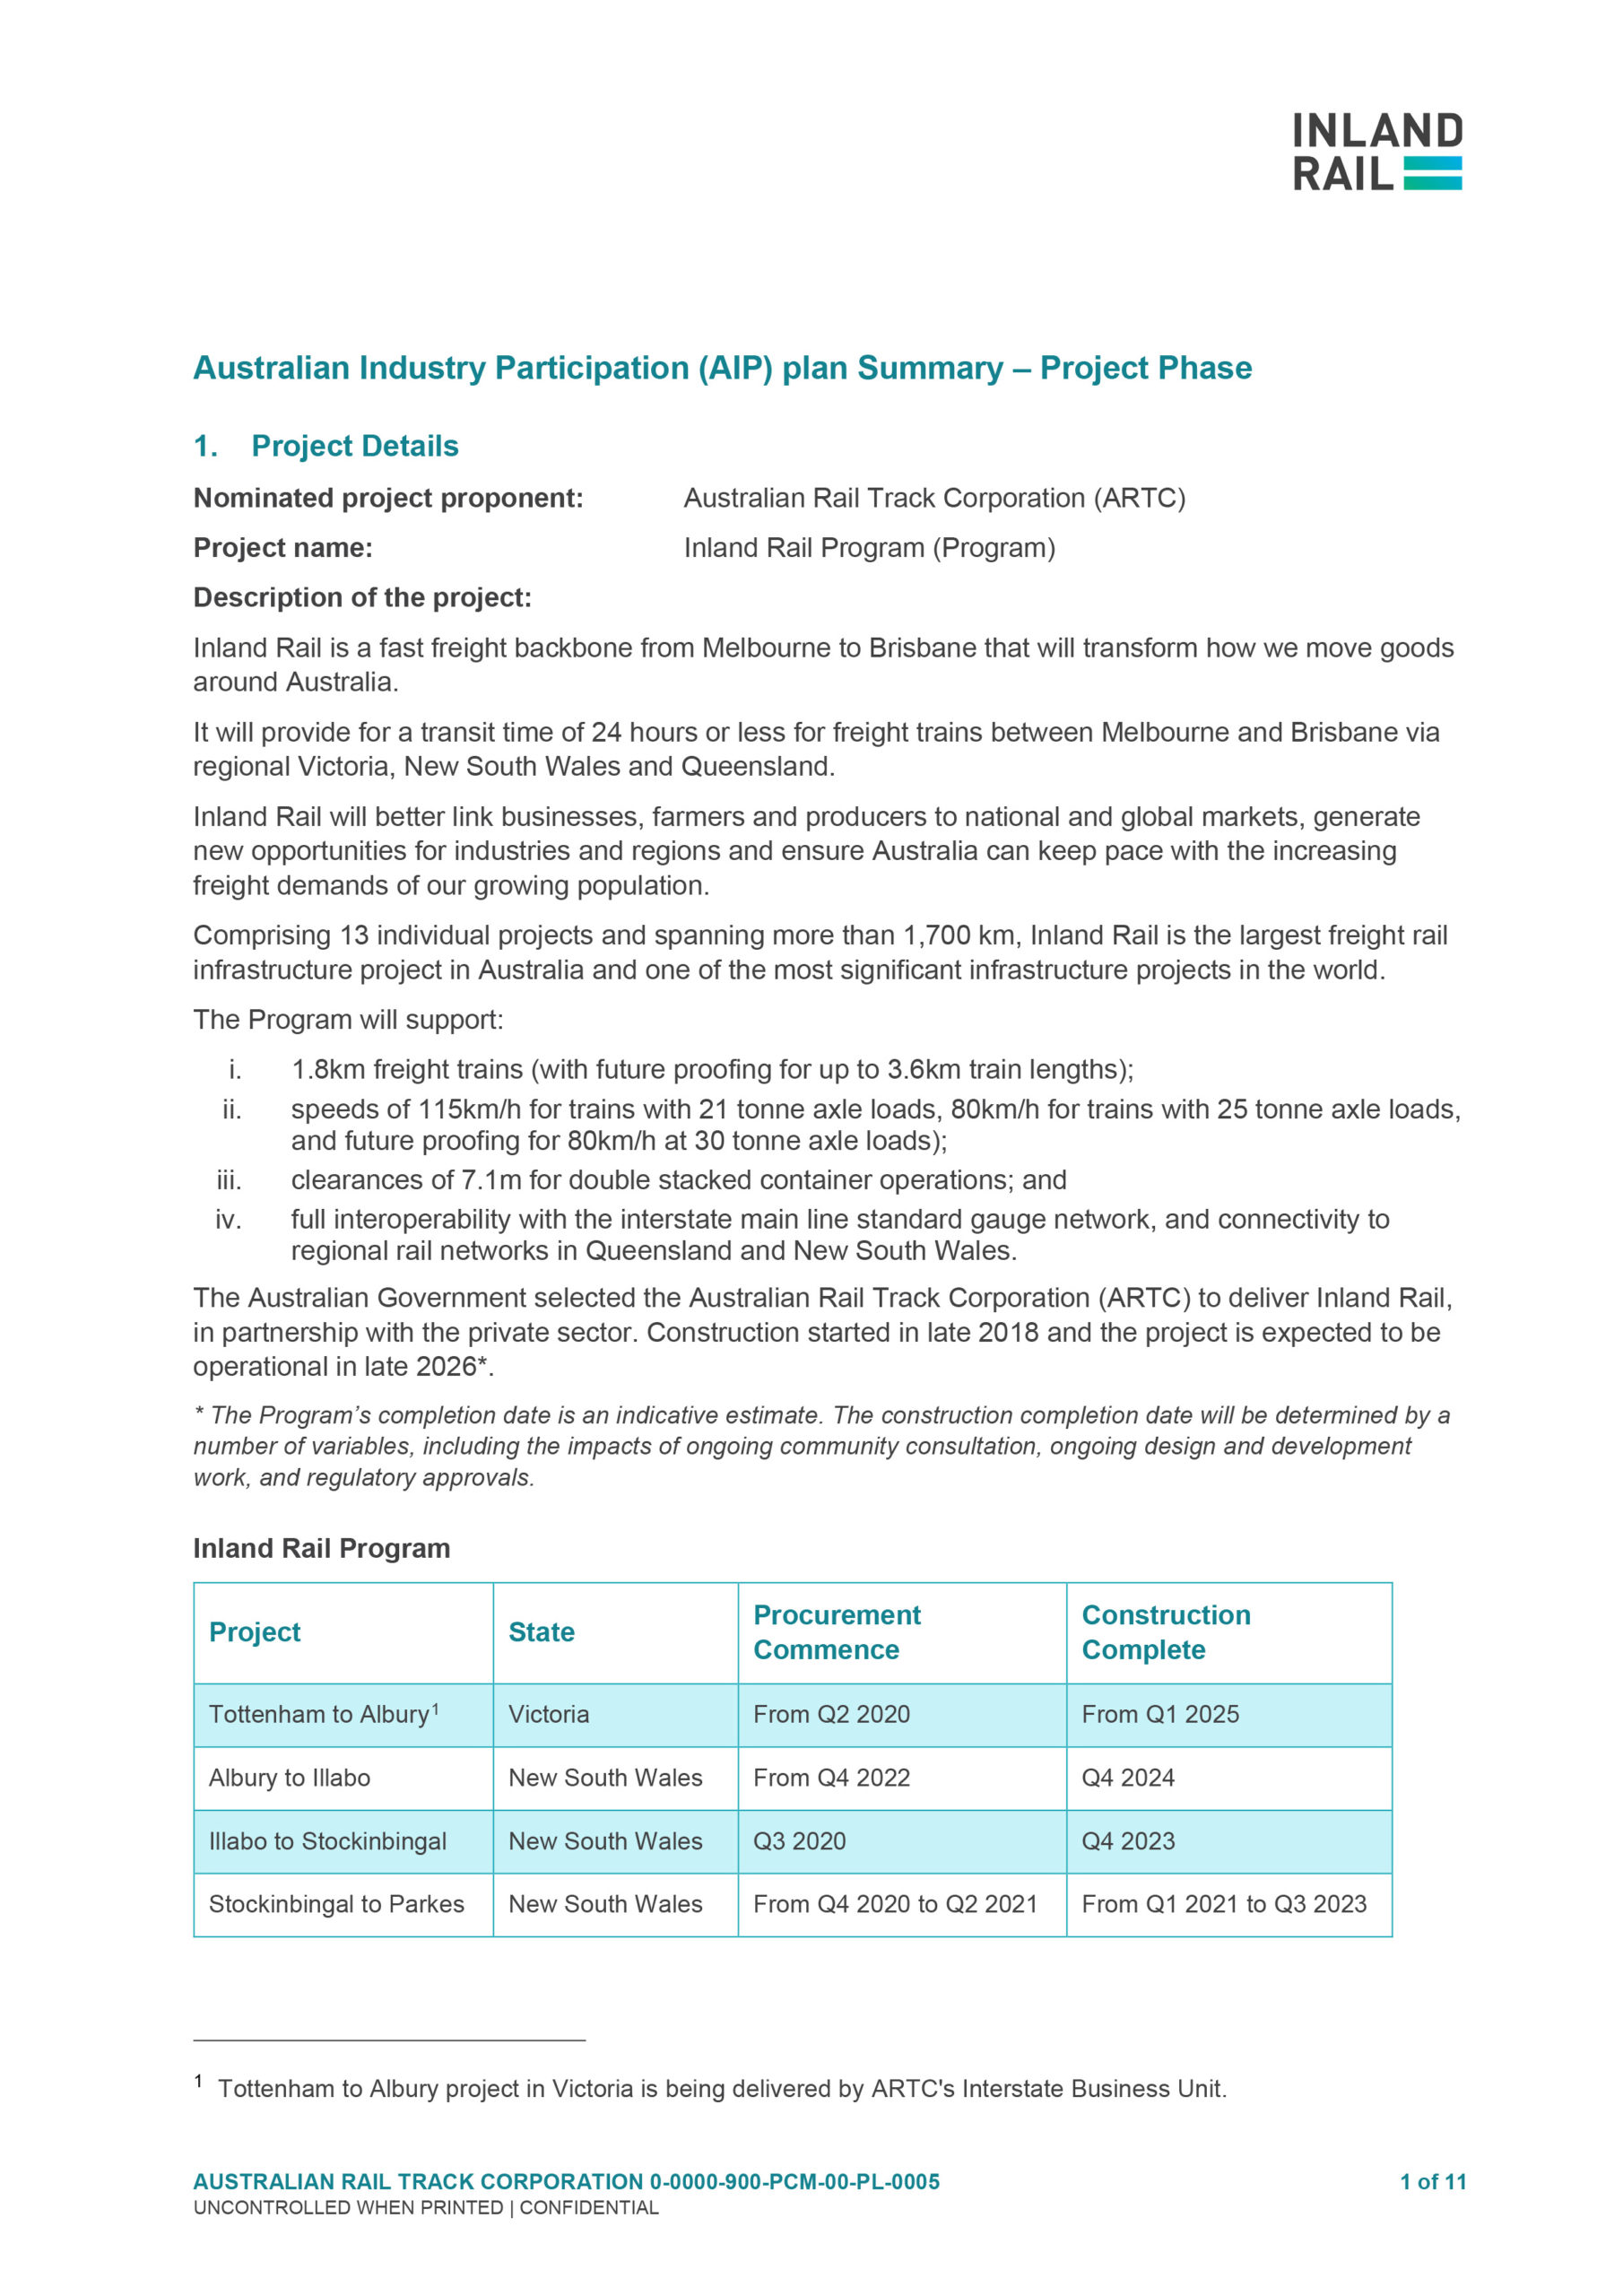 Australian Industry Participation Plan – Summary (August 2020)